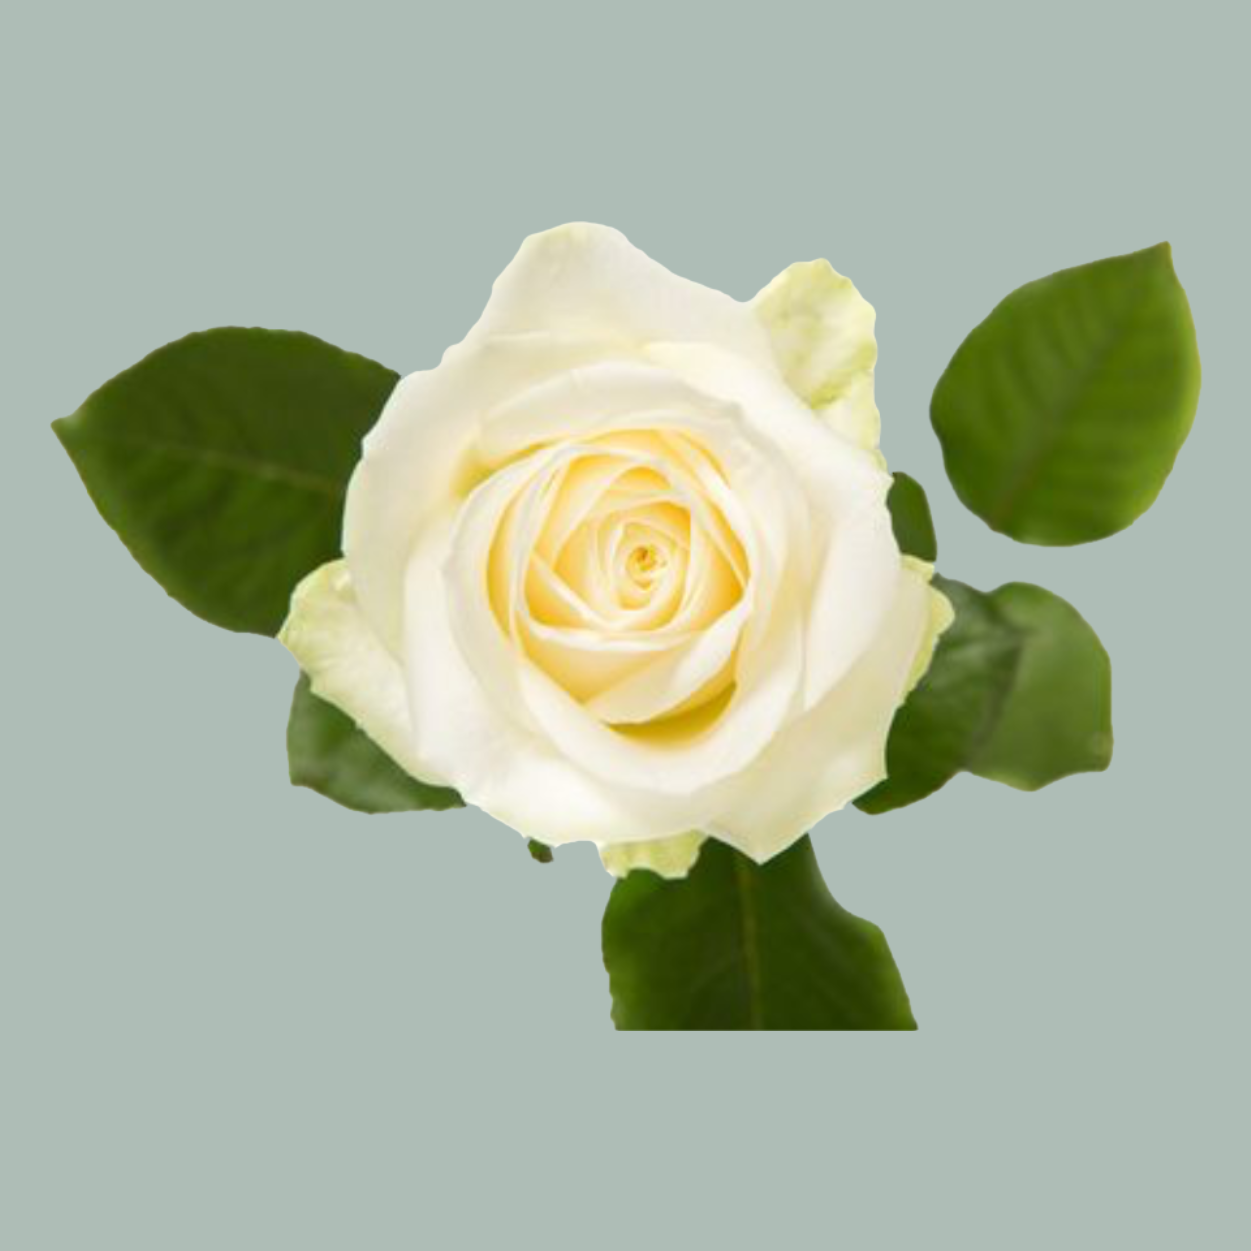 Rose Avalanche White 60-80cm (10 Stems)